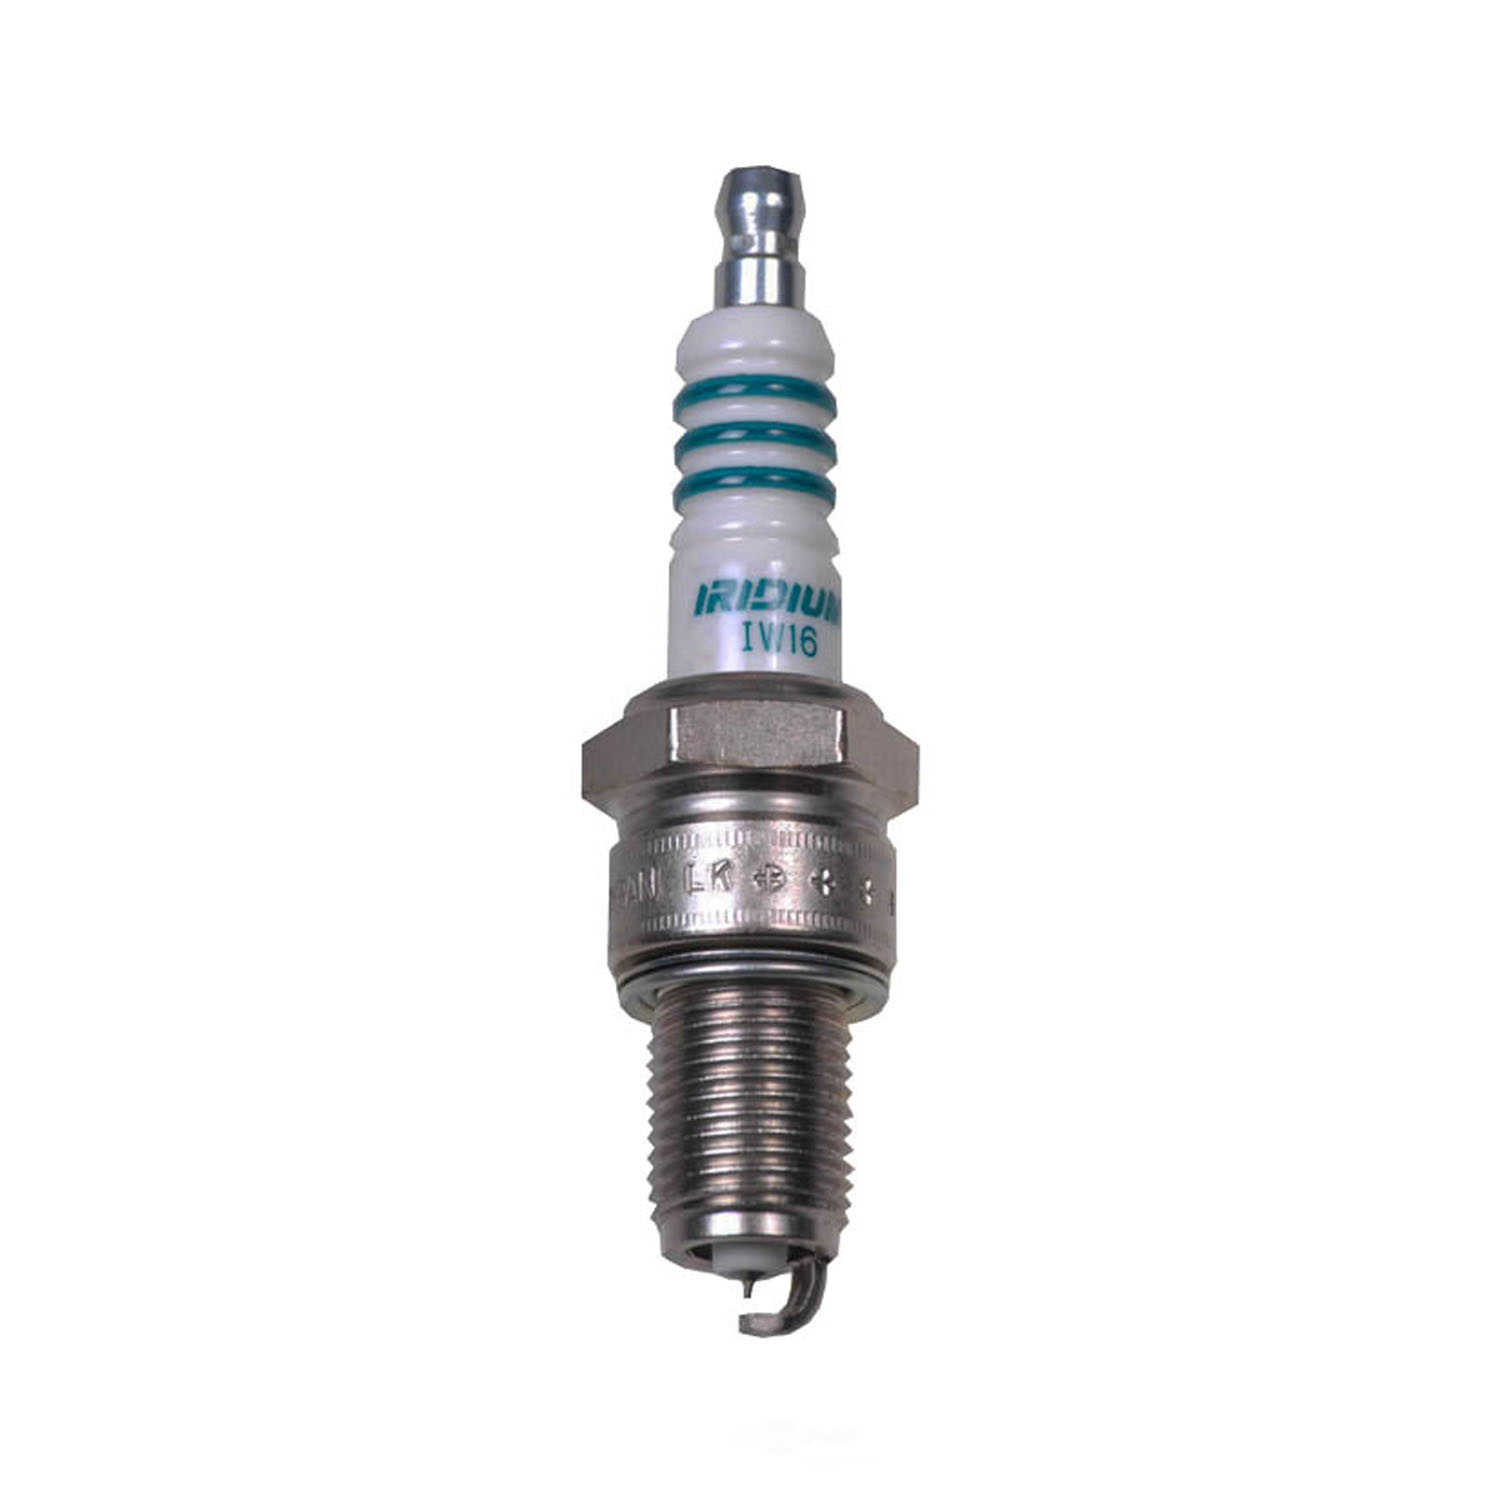 DENSO - Iridium Power Spark Plug - NDE IW16